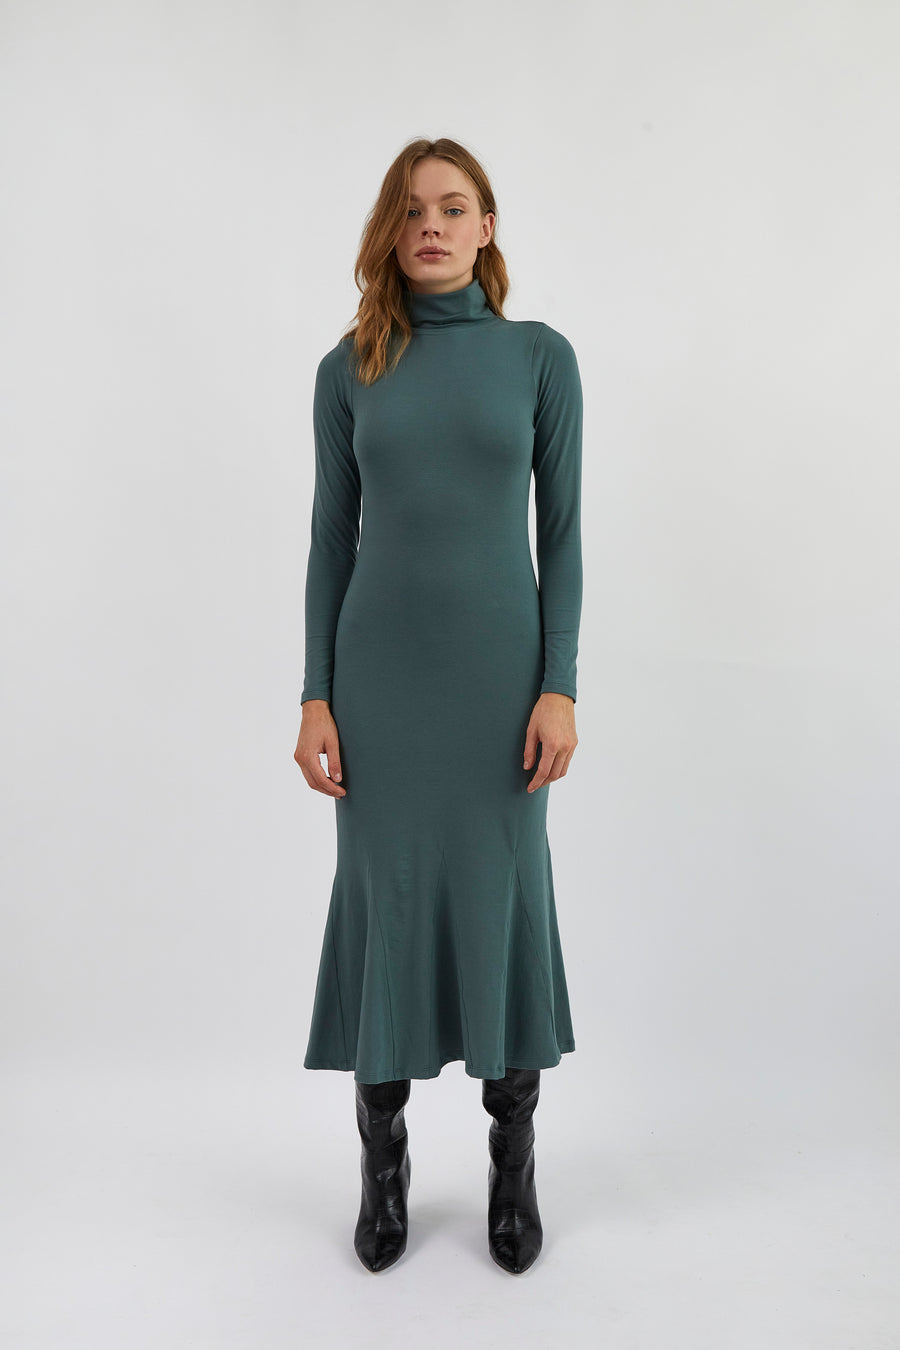 Melancolia Green dress